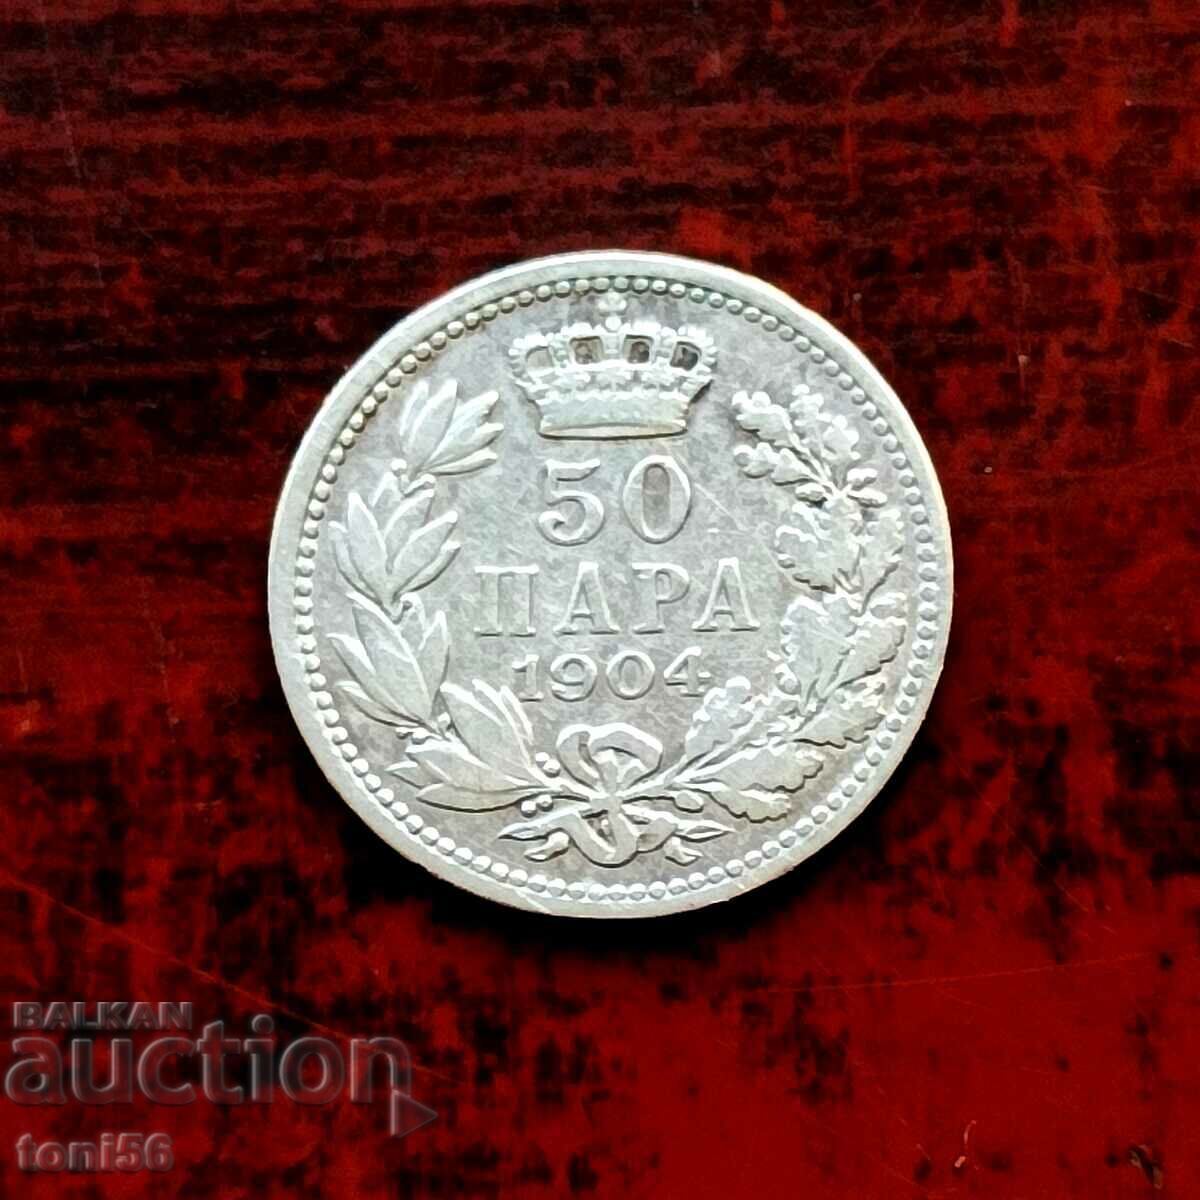 Serbia 50 money 1904 - silver